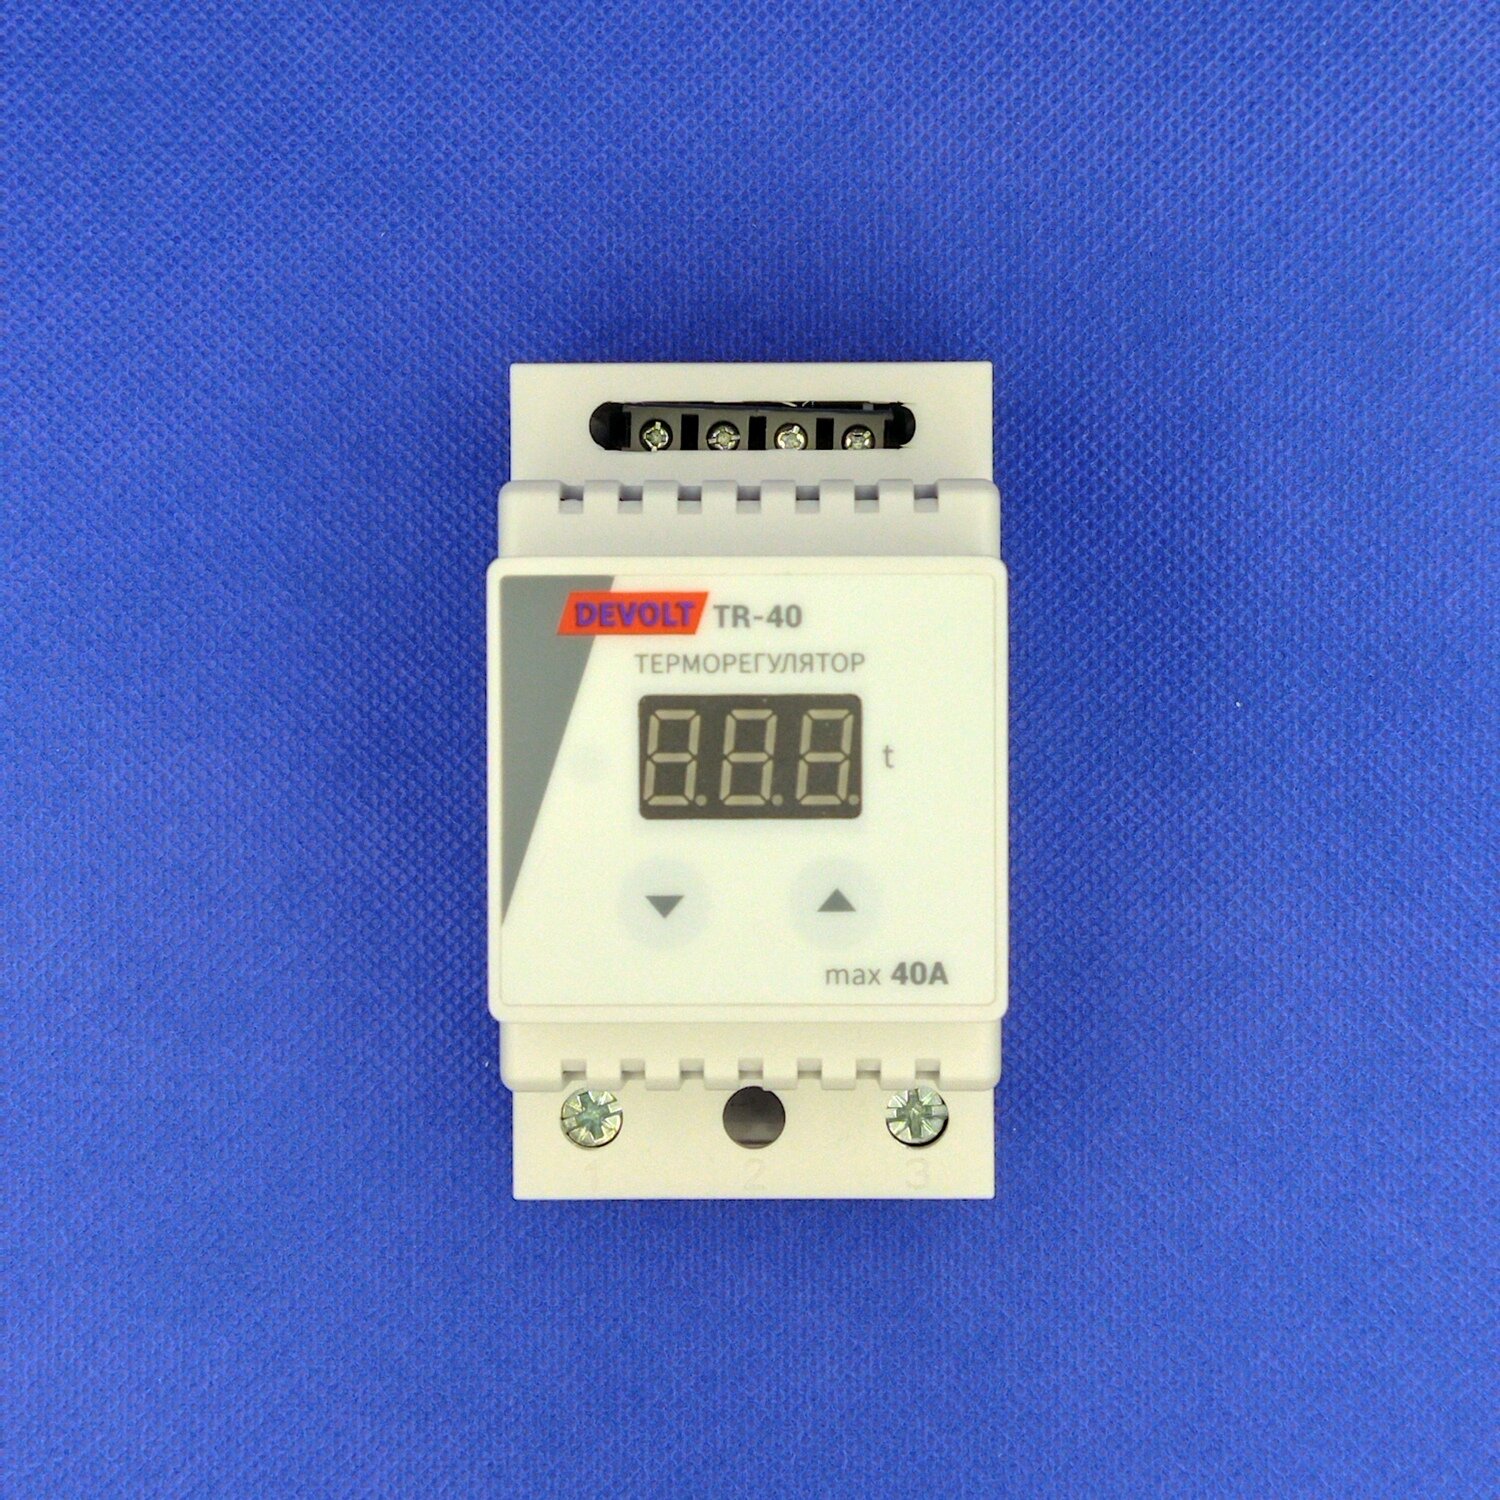 Терморегулятор DEVOLT Devolt TR-40 белый